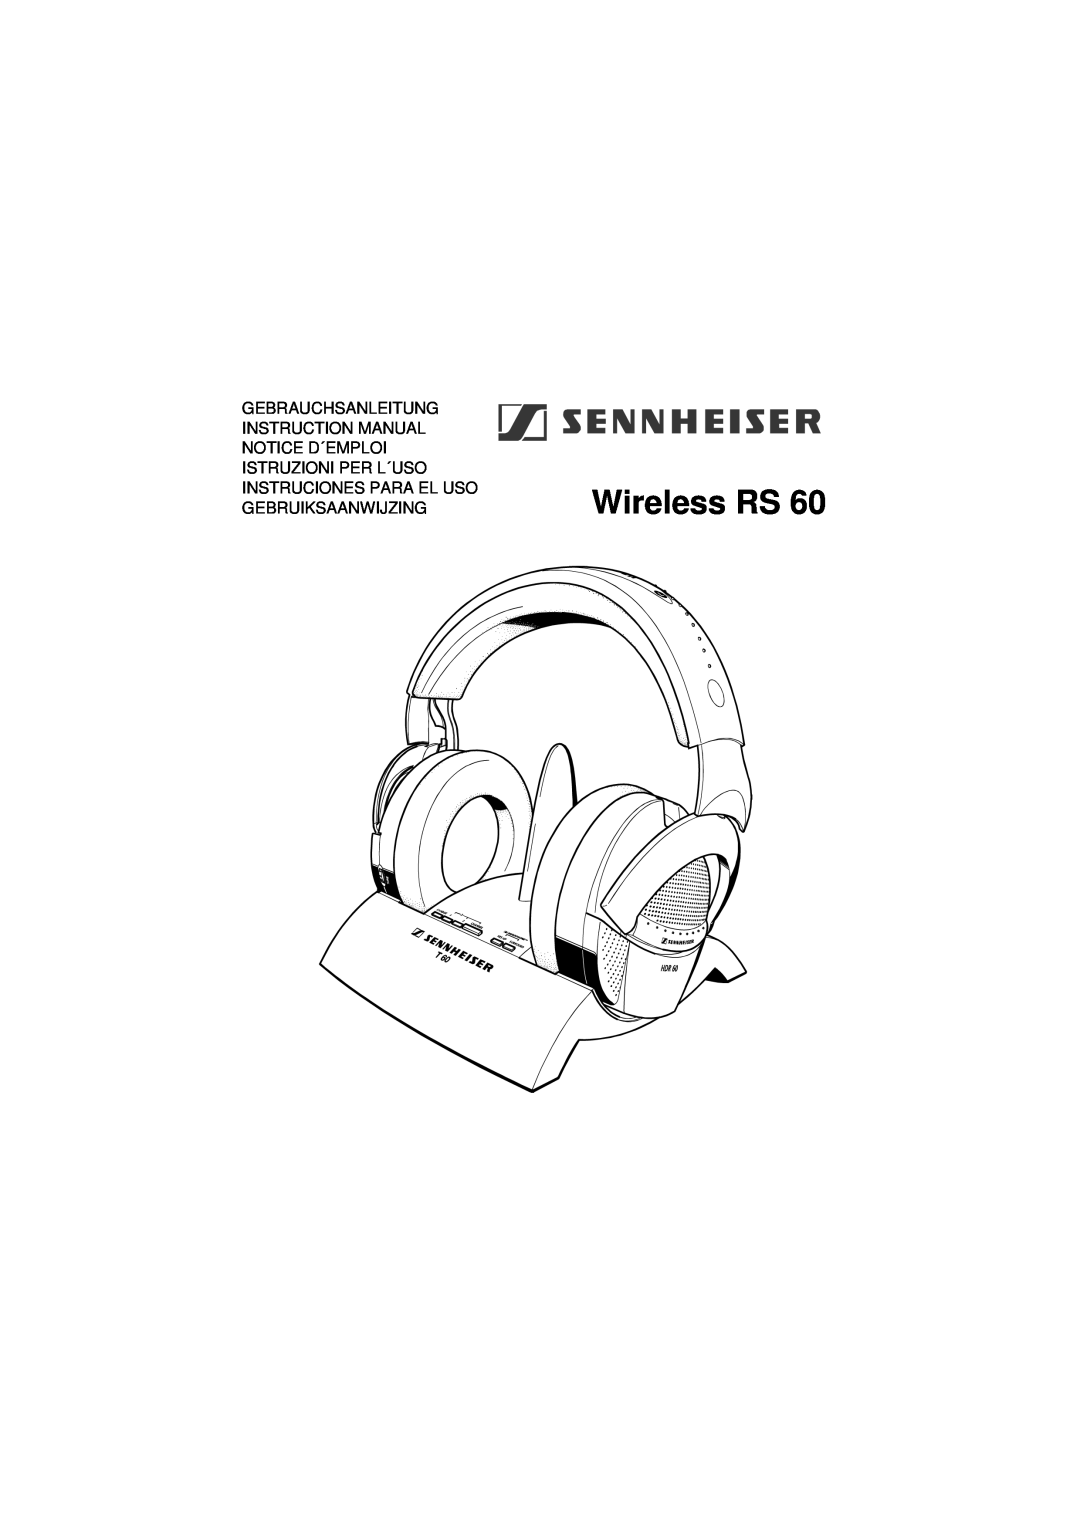 Sennheiser Wireless RS 60 instruction manual 